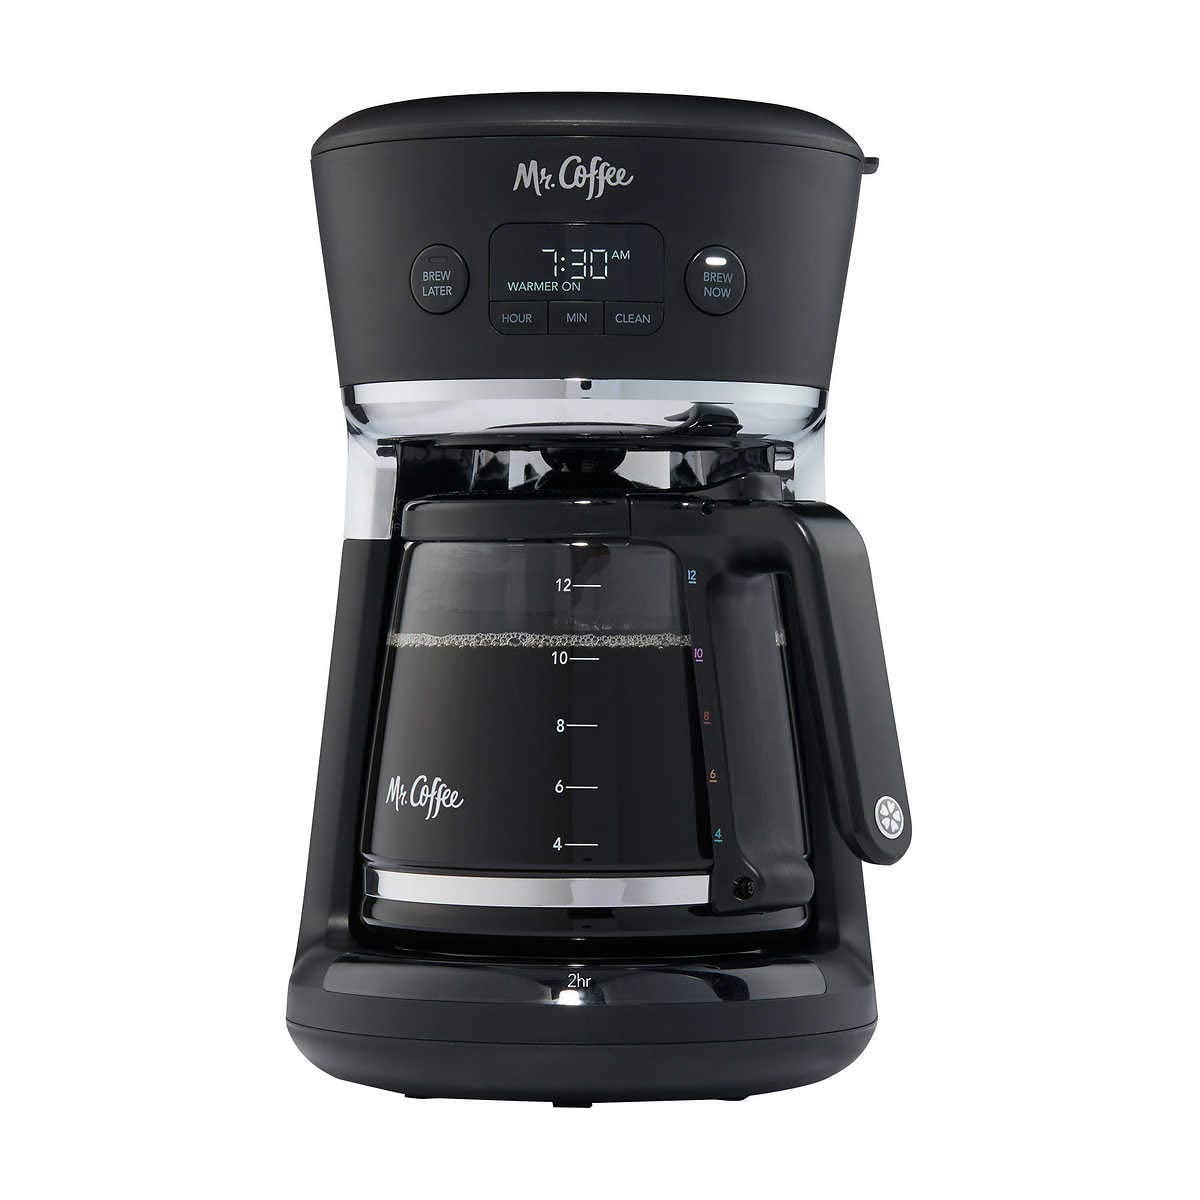 Mr. Coffee® 12 Cup Programmable Coffeemaker, 1 ct - Ralphs